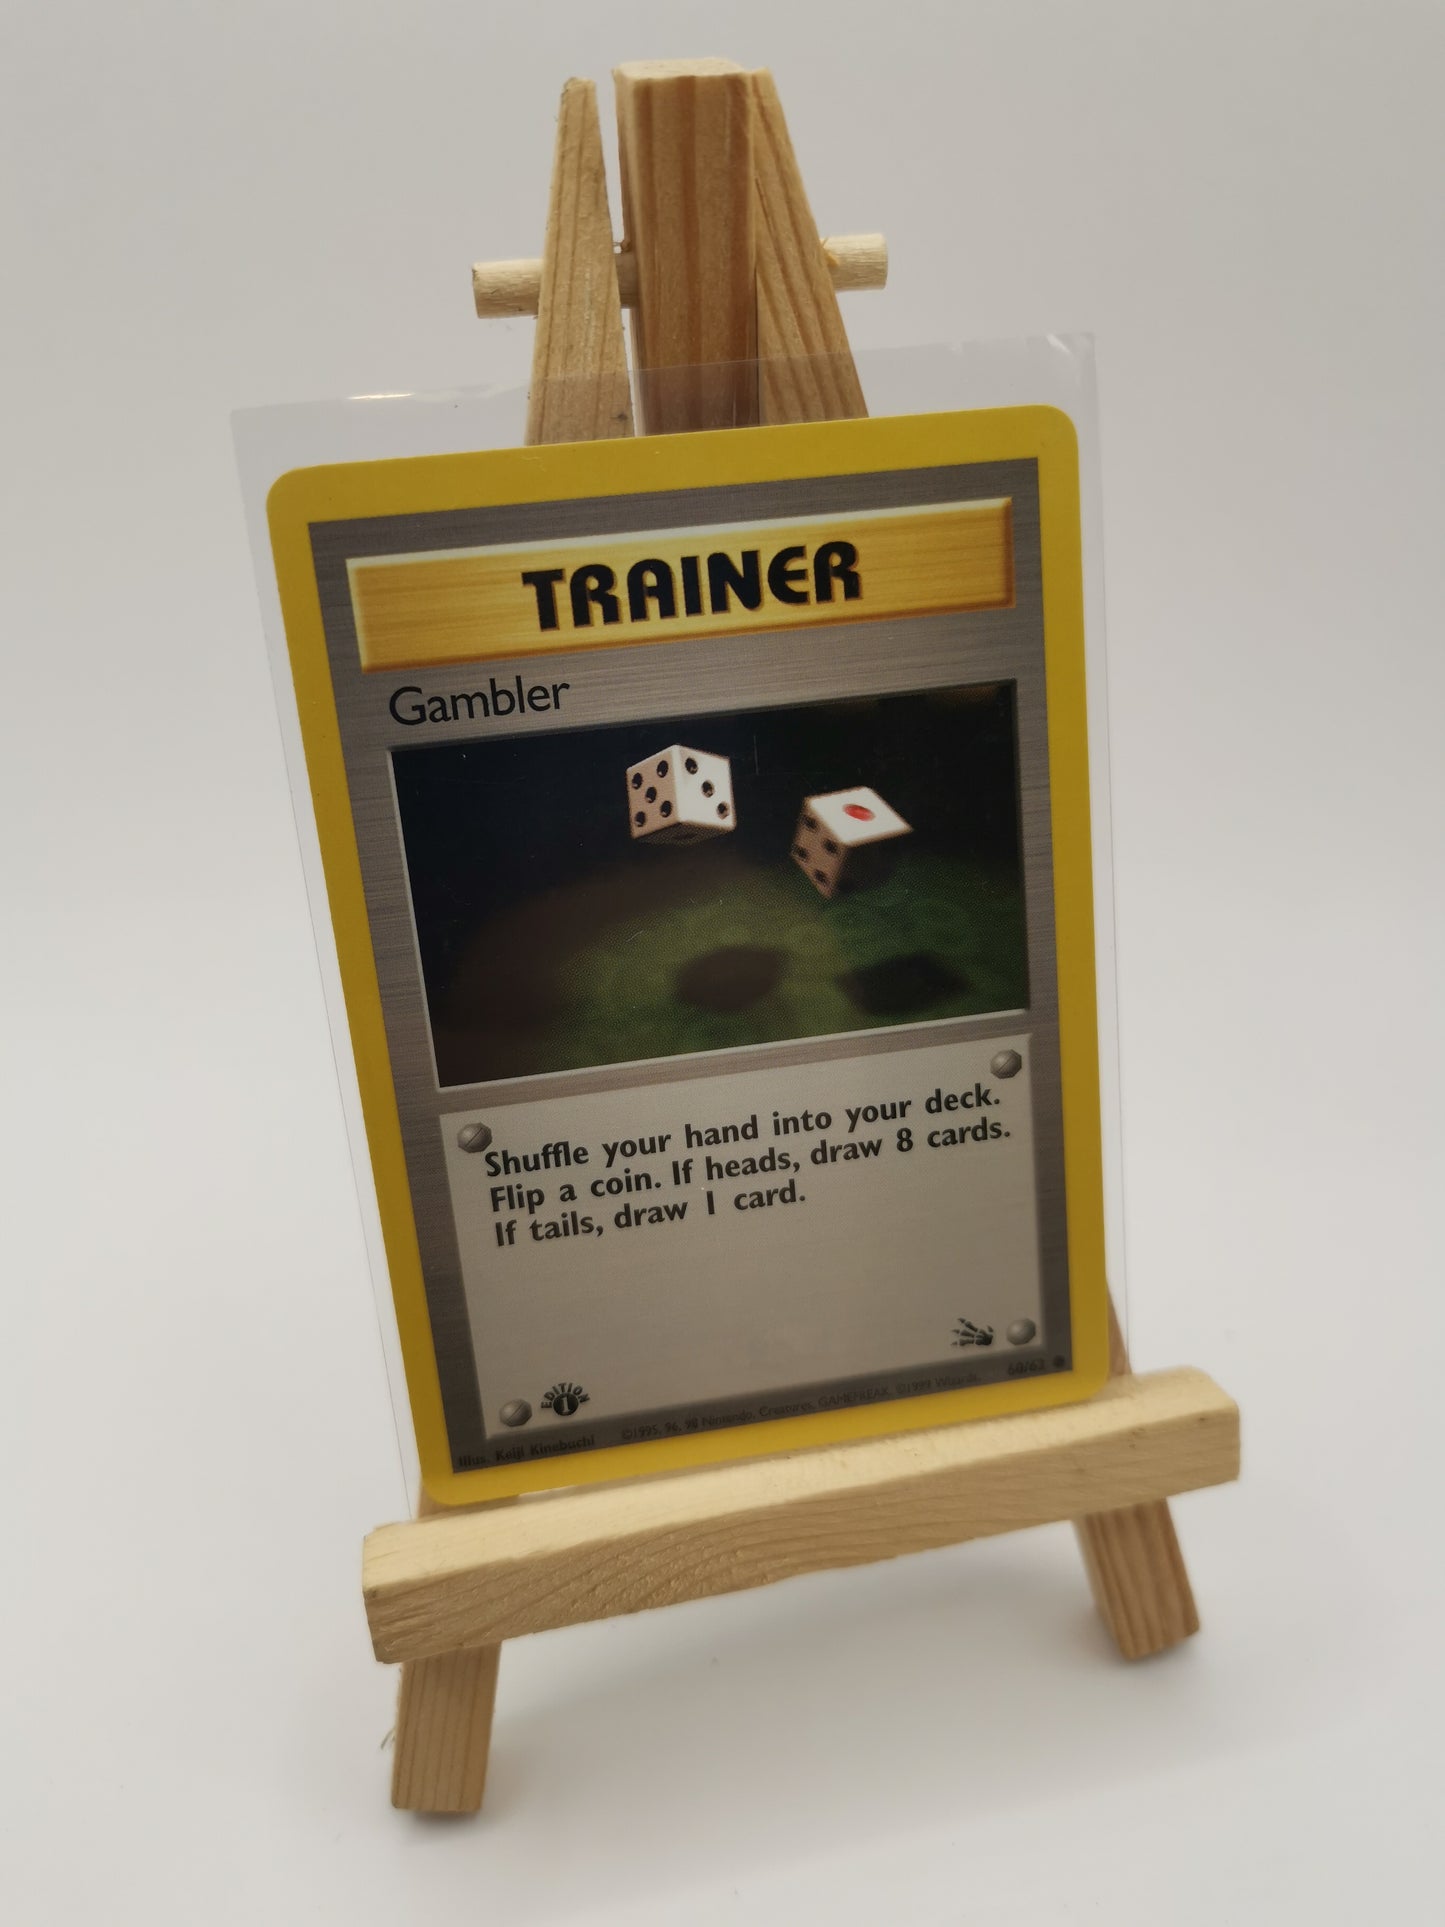 1st Edition Gambler 60/62 Fossil Trainer Pokémon TCG Card